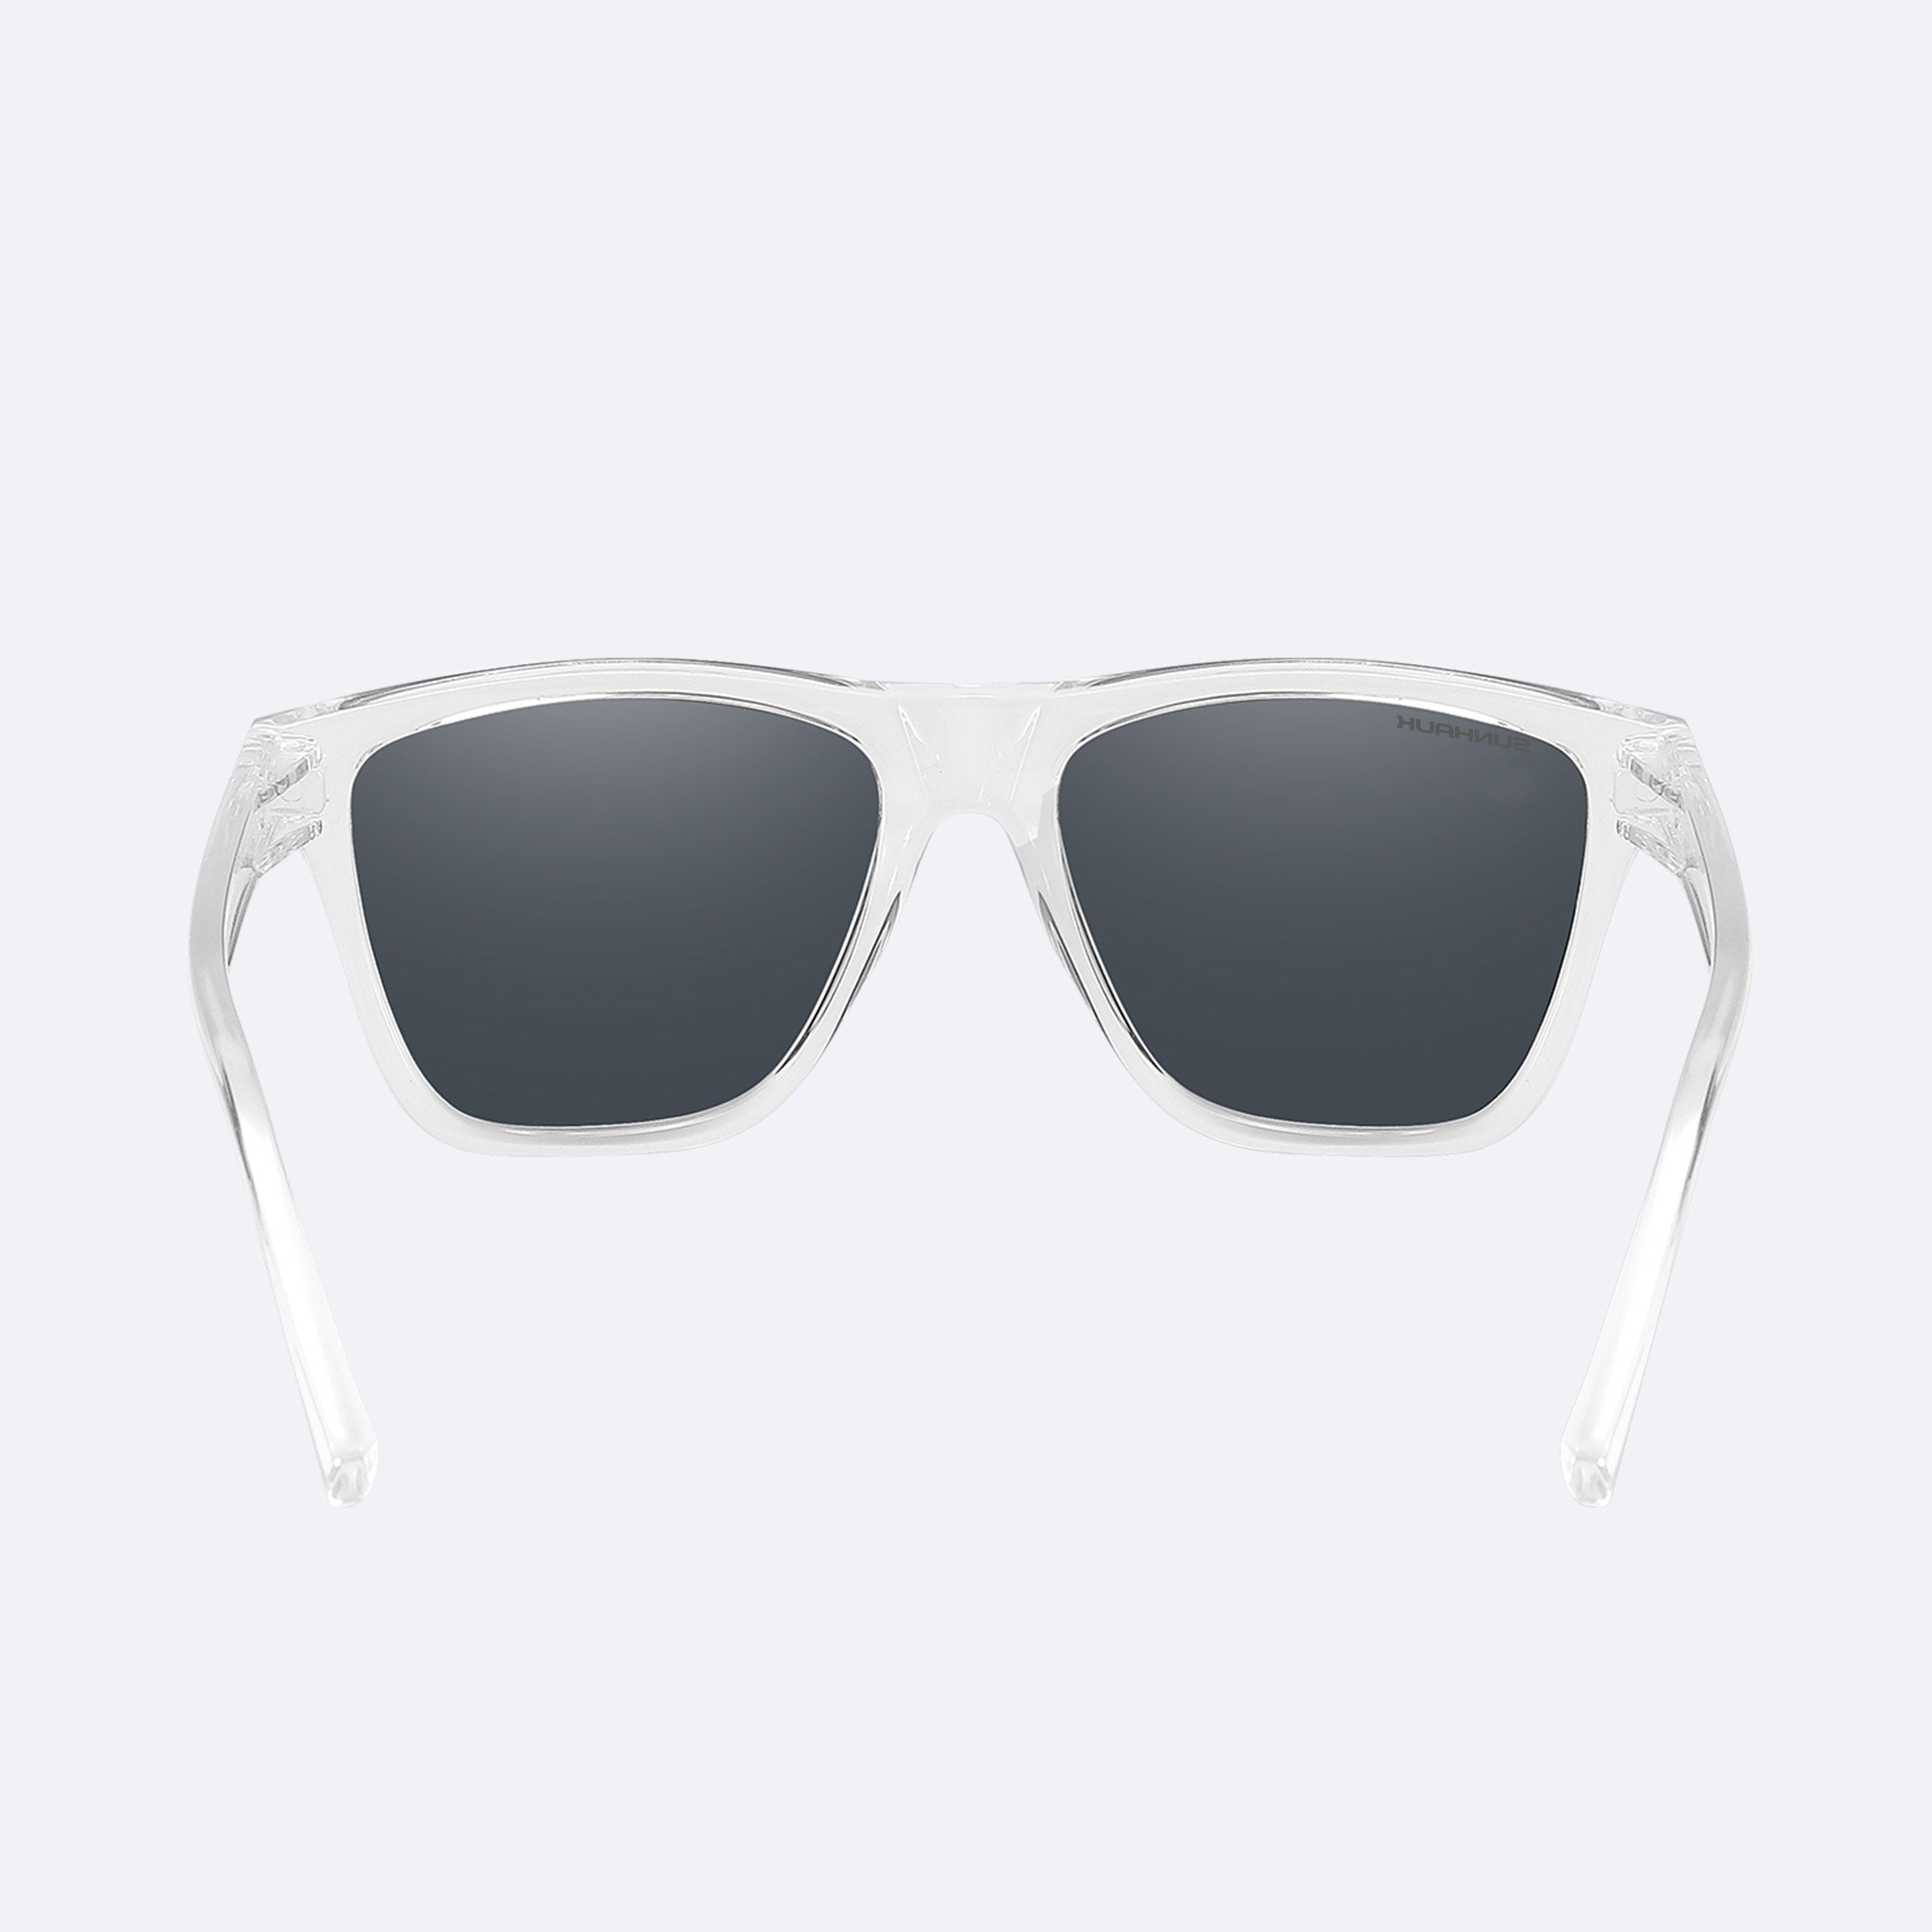 You Cool, Man?” Limited OG Polarized Sunglasses – Rare Air Discs